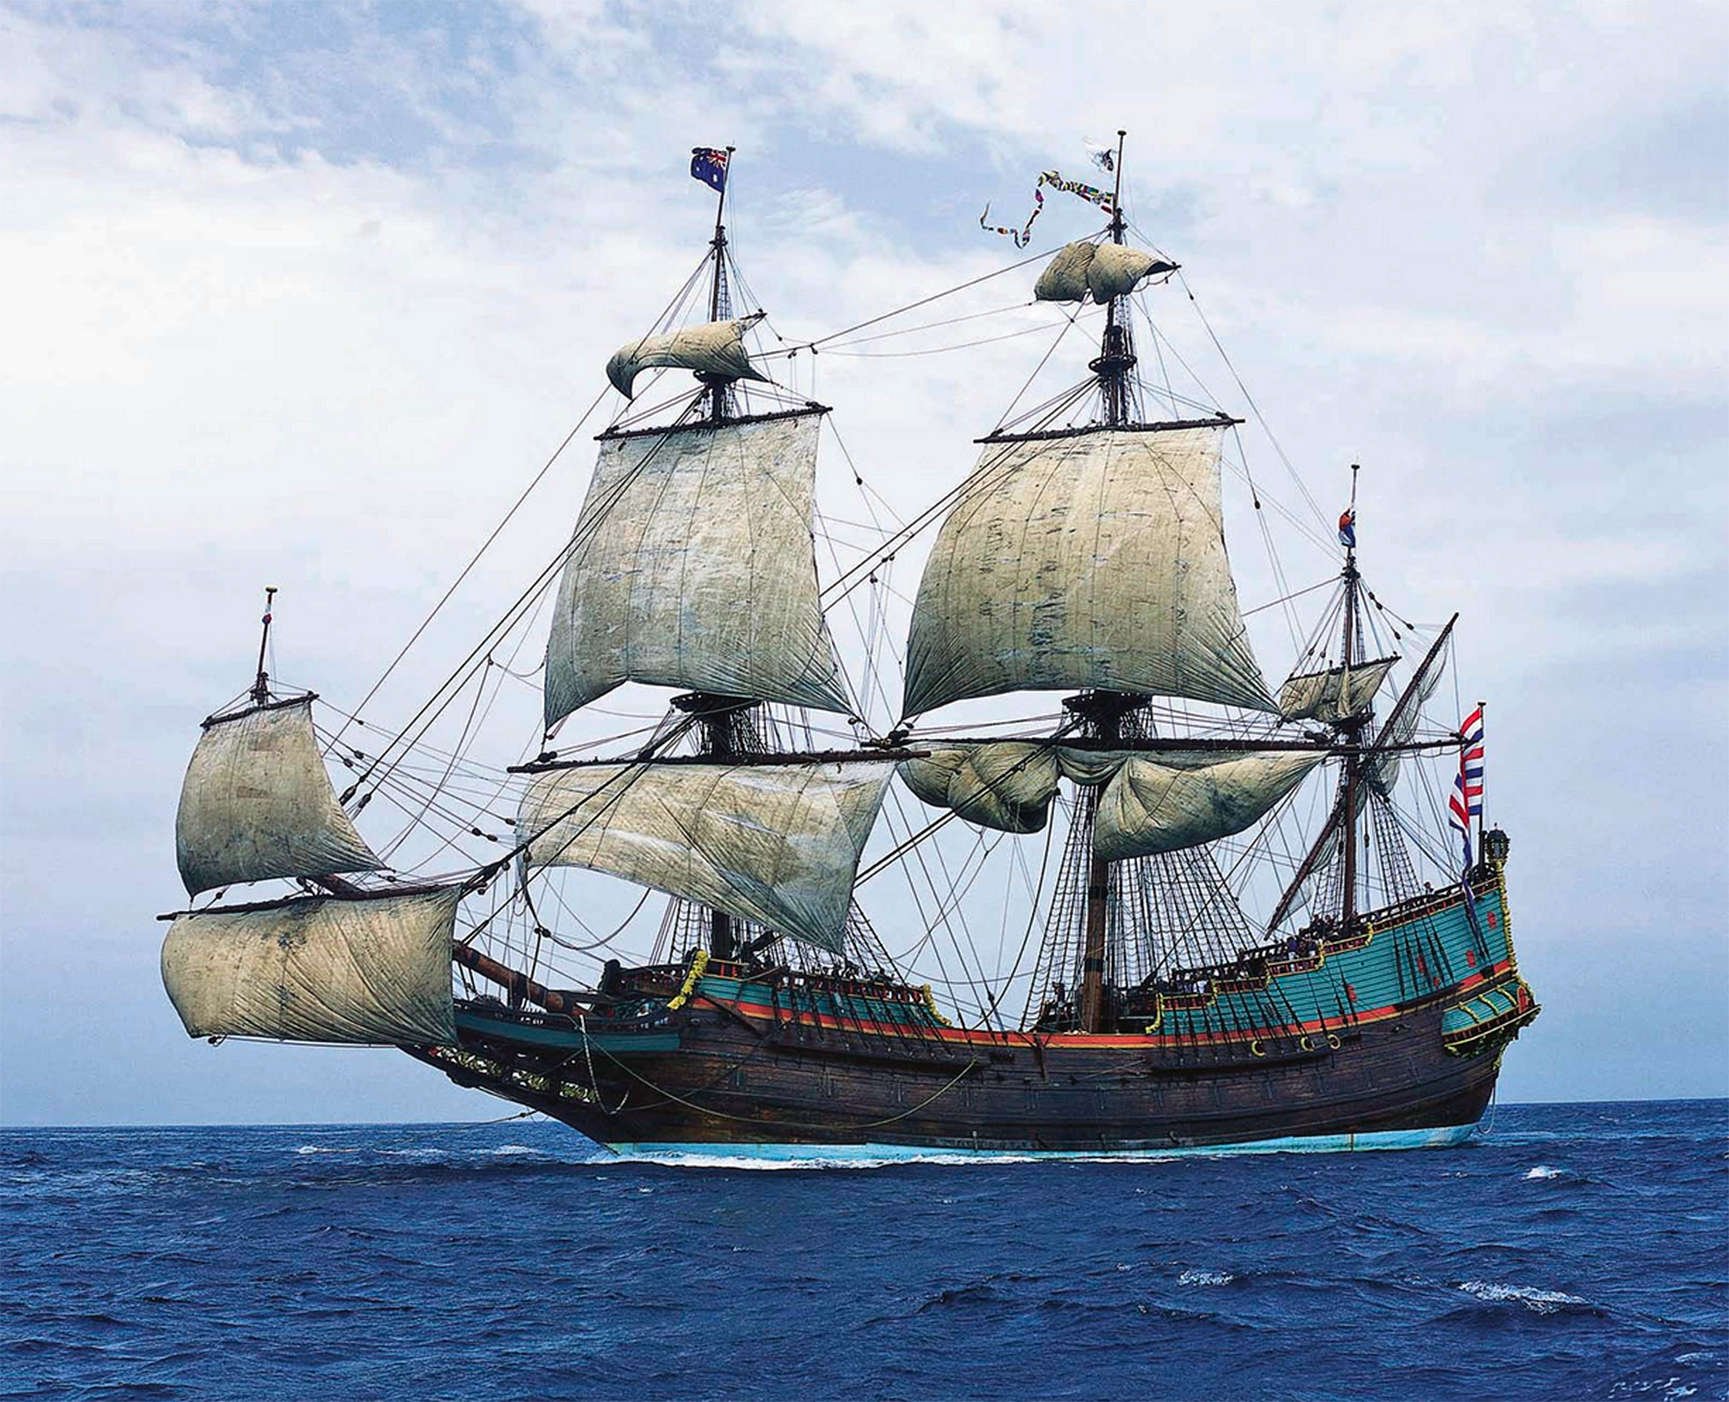 Фрегат каталог. Корабль Галеон Батавия. Батавия корабль, 1628. Галеон Батавия модель. Парусный Галеон 17 века.